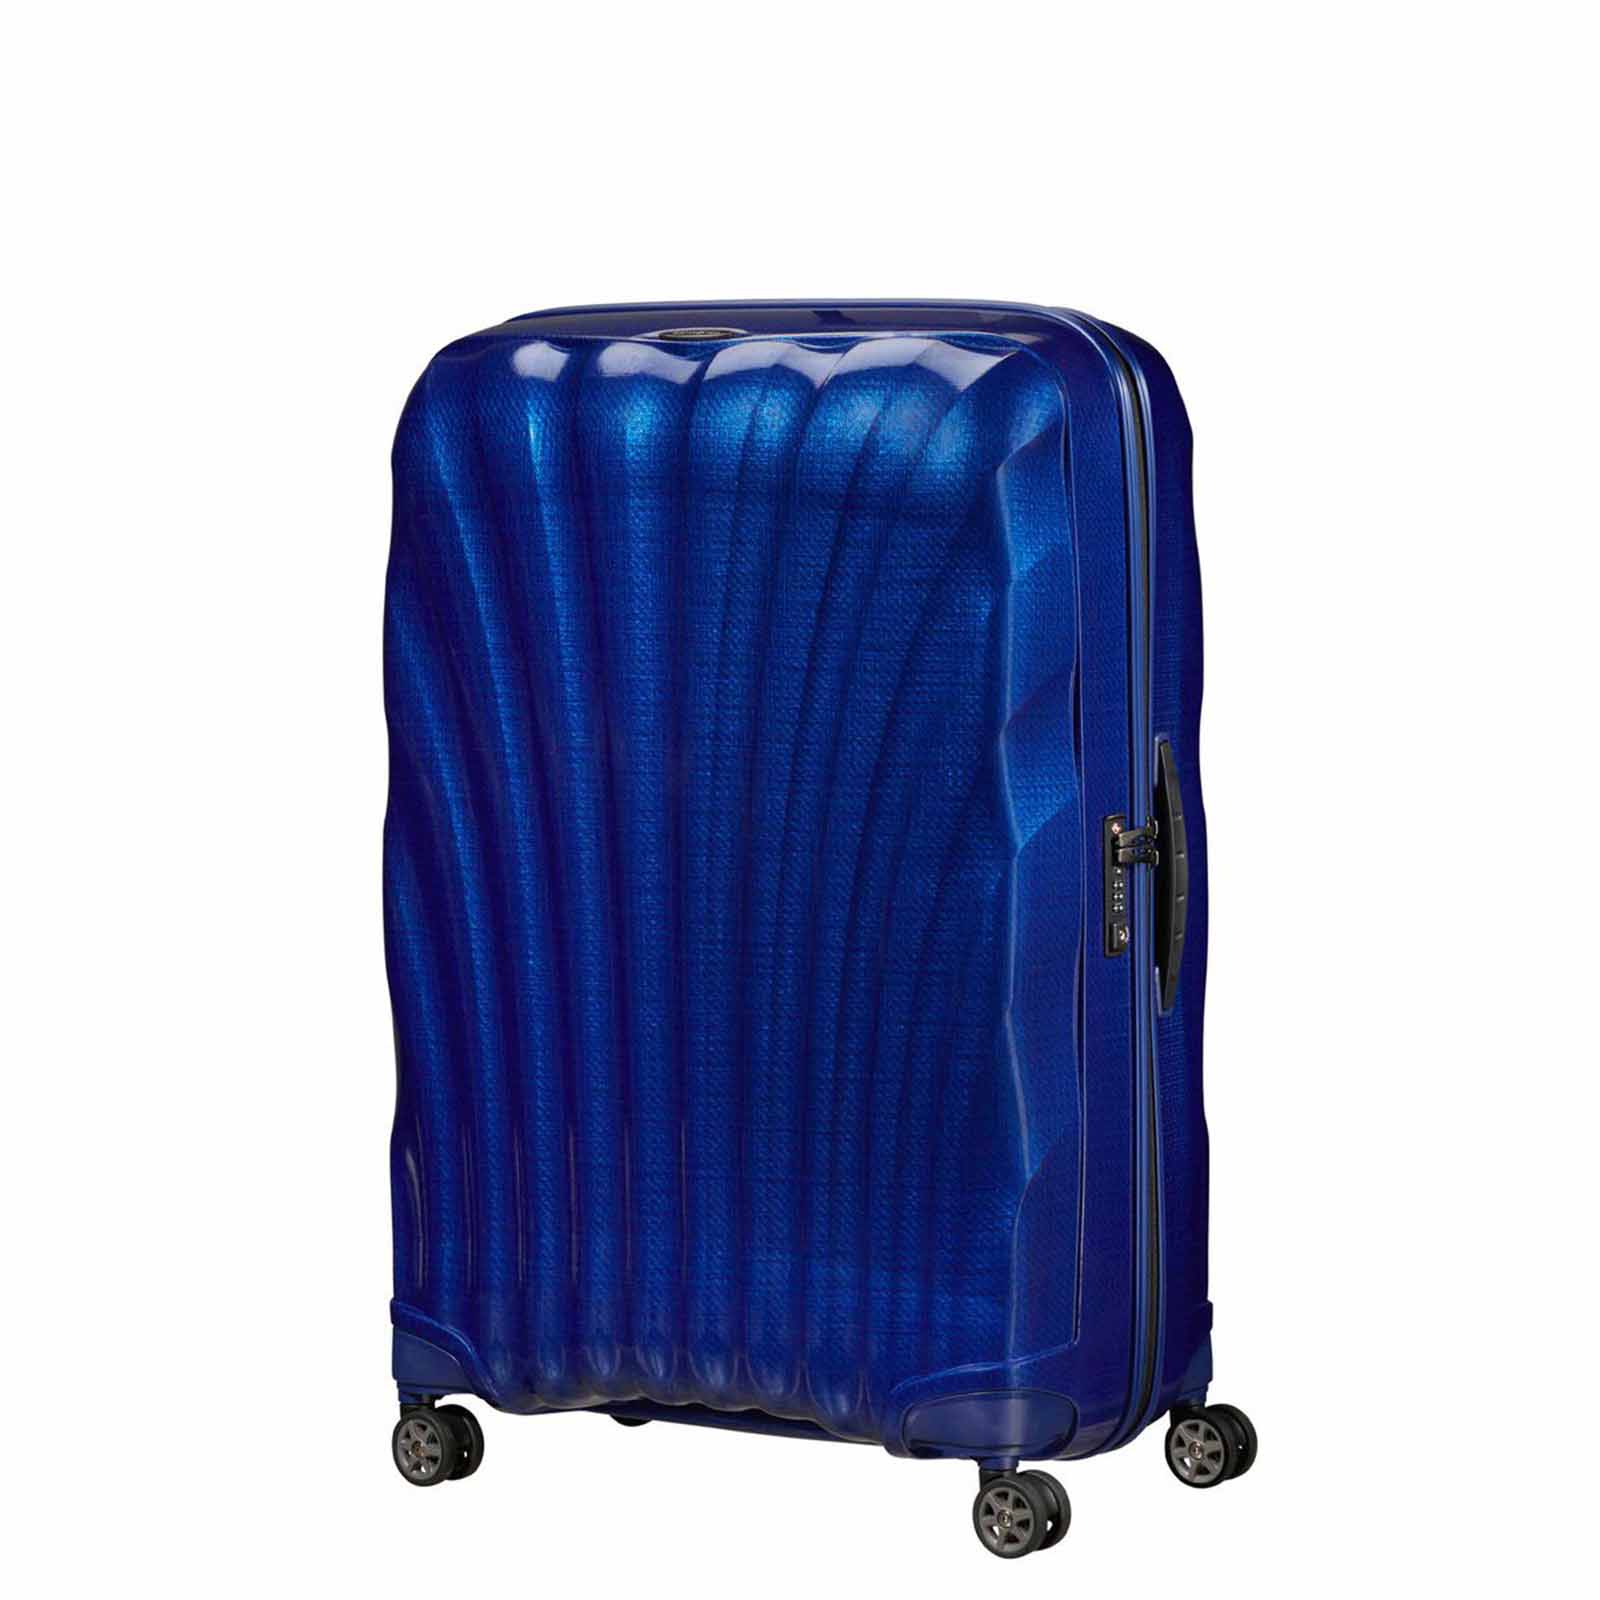 Samsonite-C-Lite-81cm-Suitcase-Deep-Blue-Front-Angle